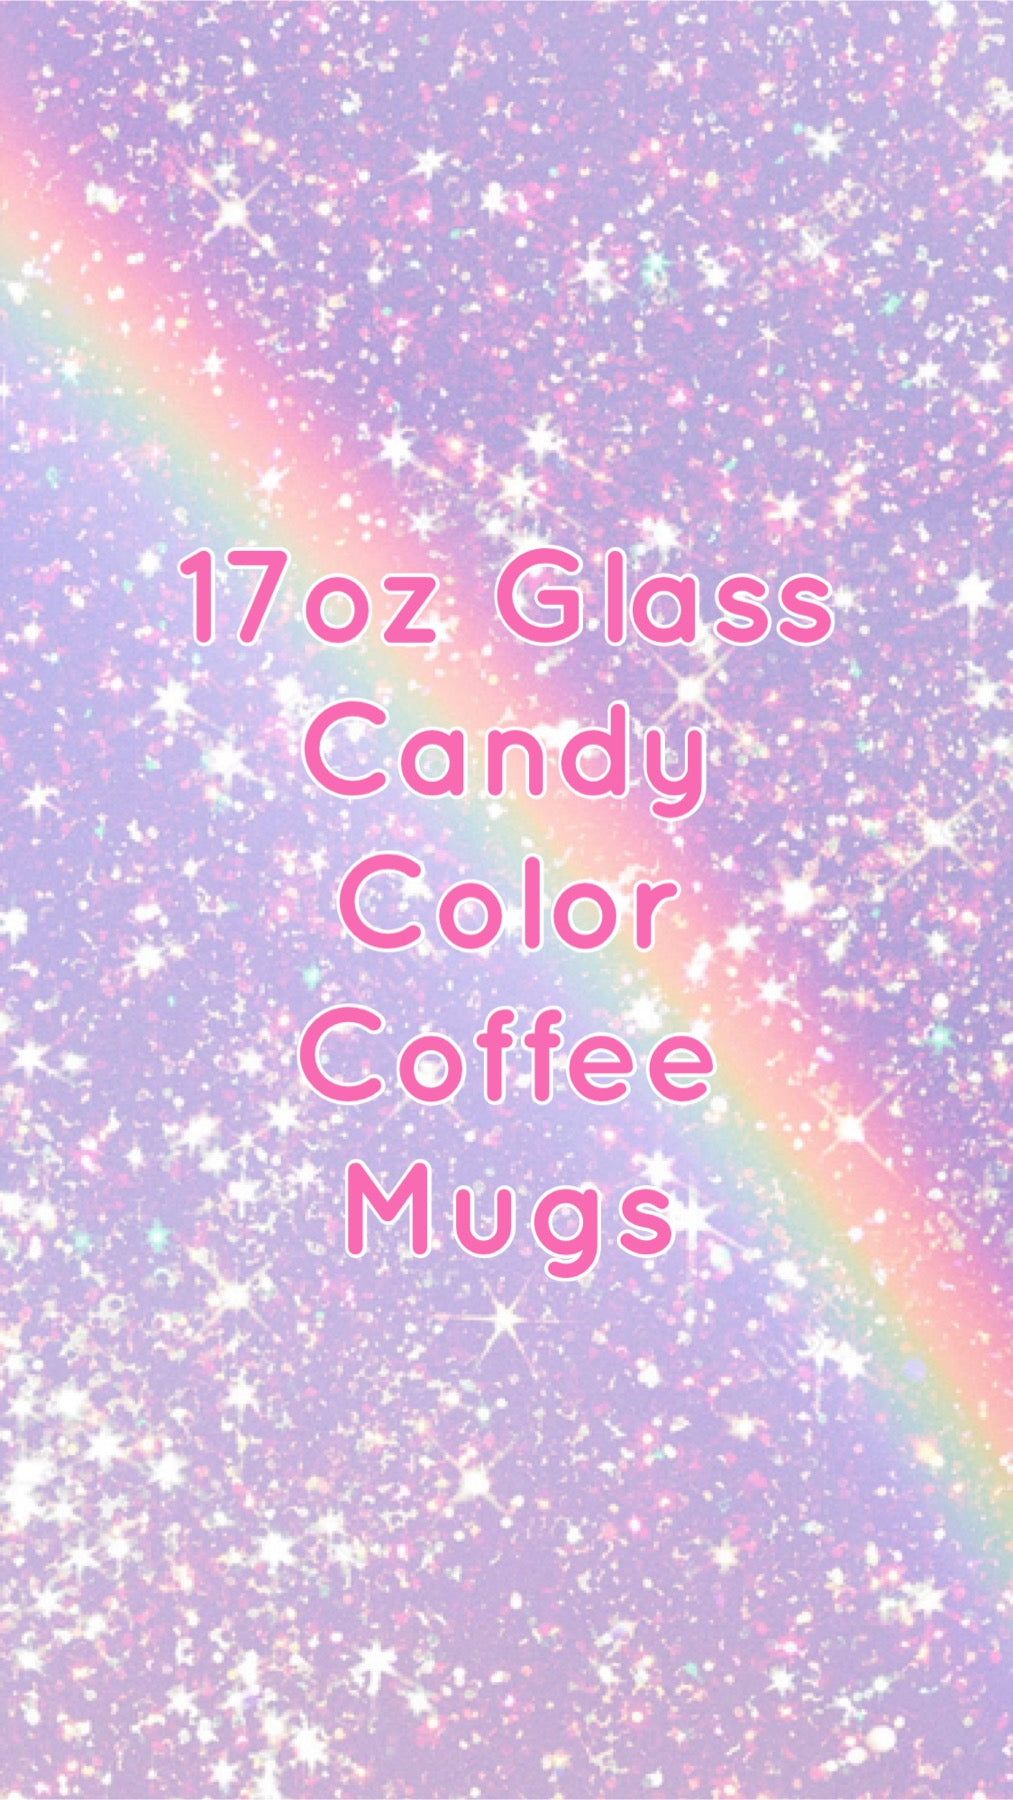 17oz Glass Candy Color Coffee Mug